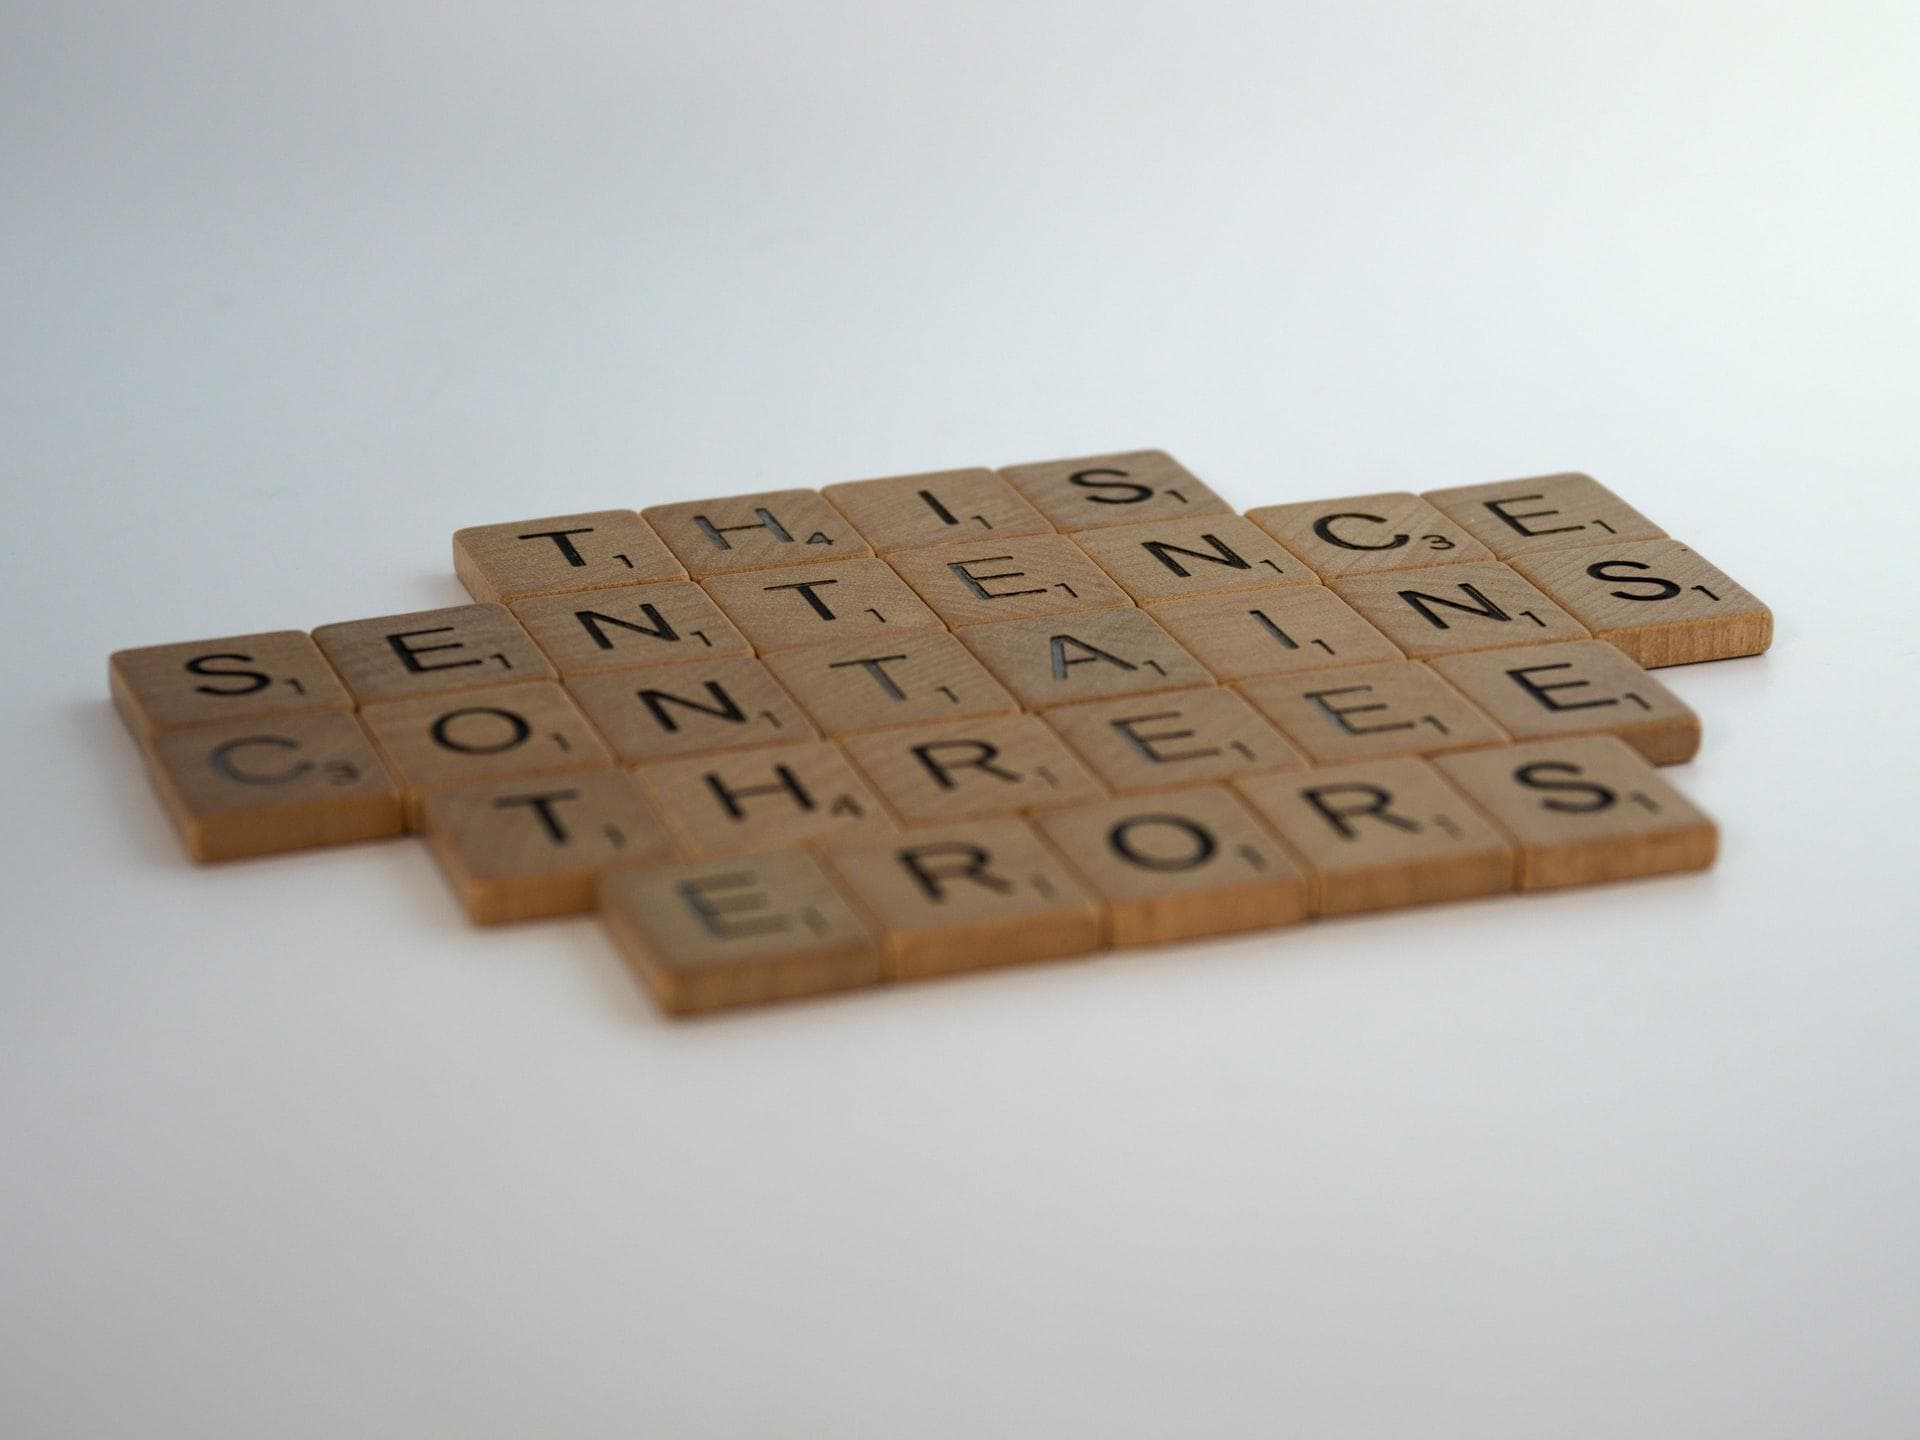 Scrabble pieces showing the sentence: 